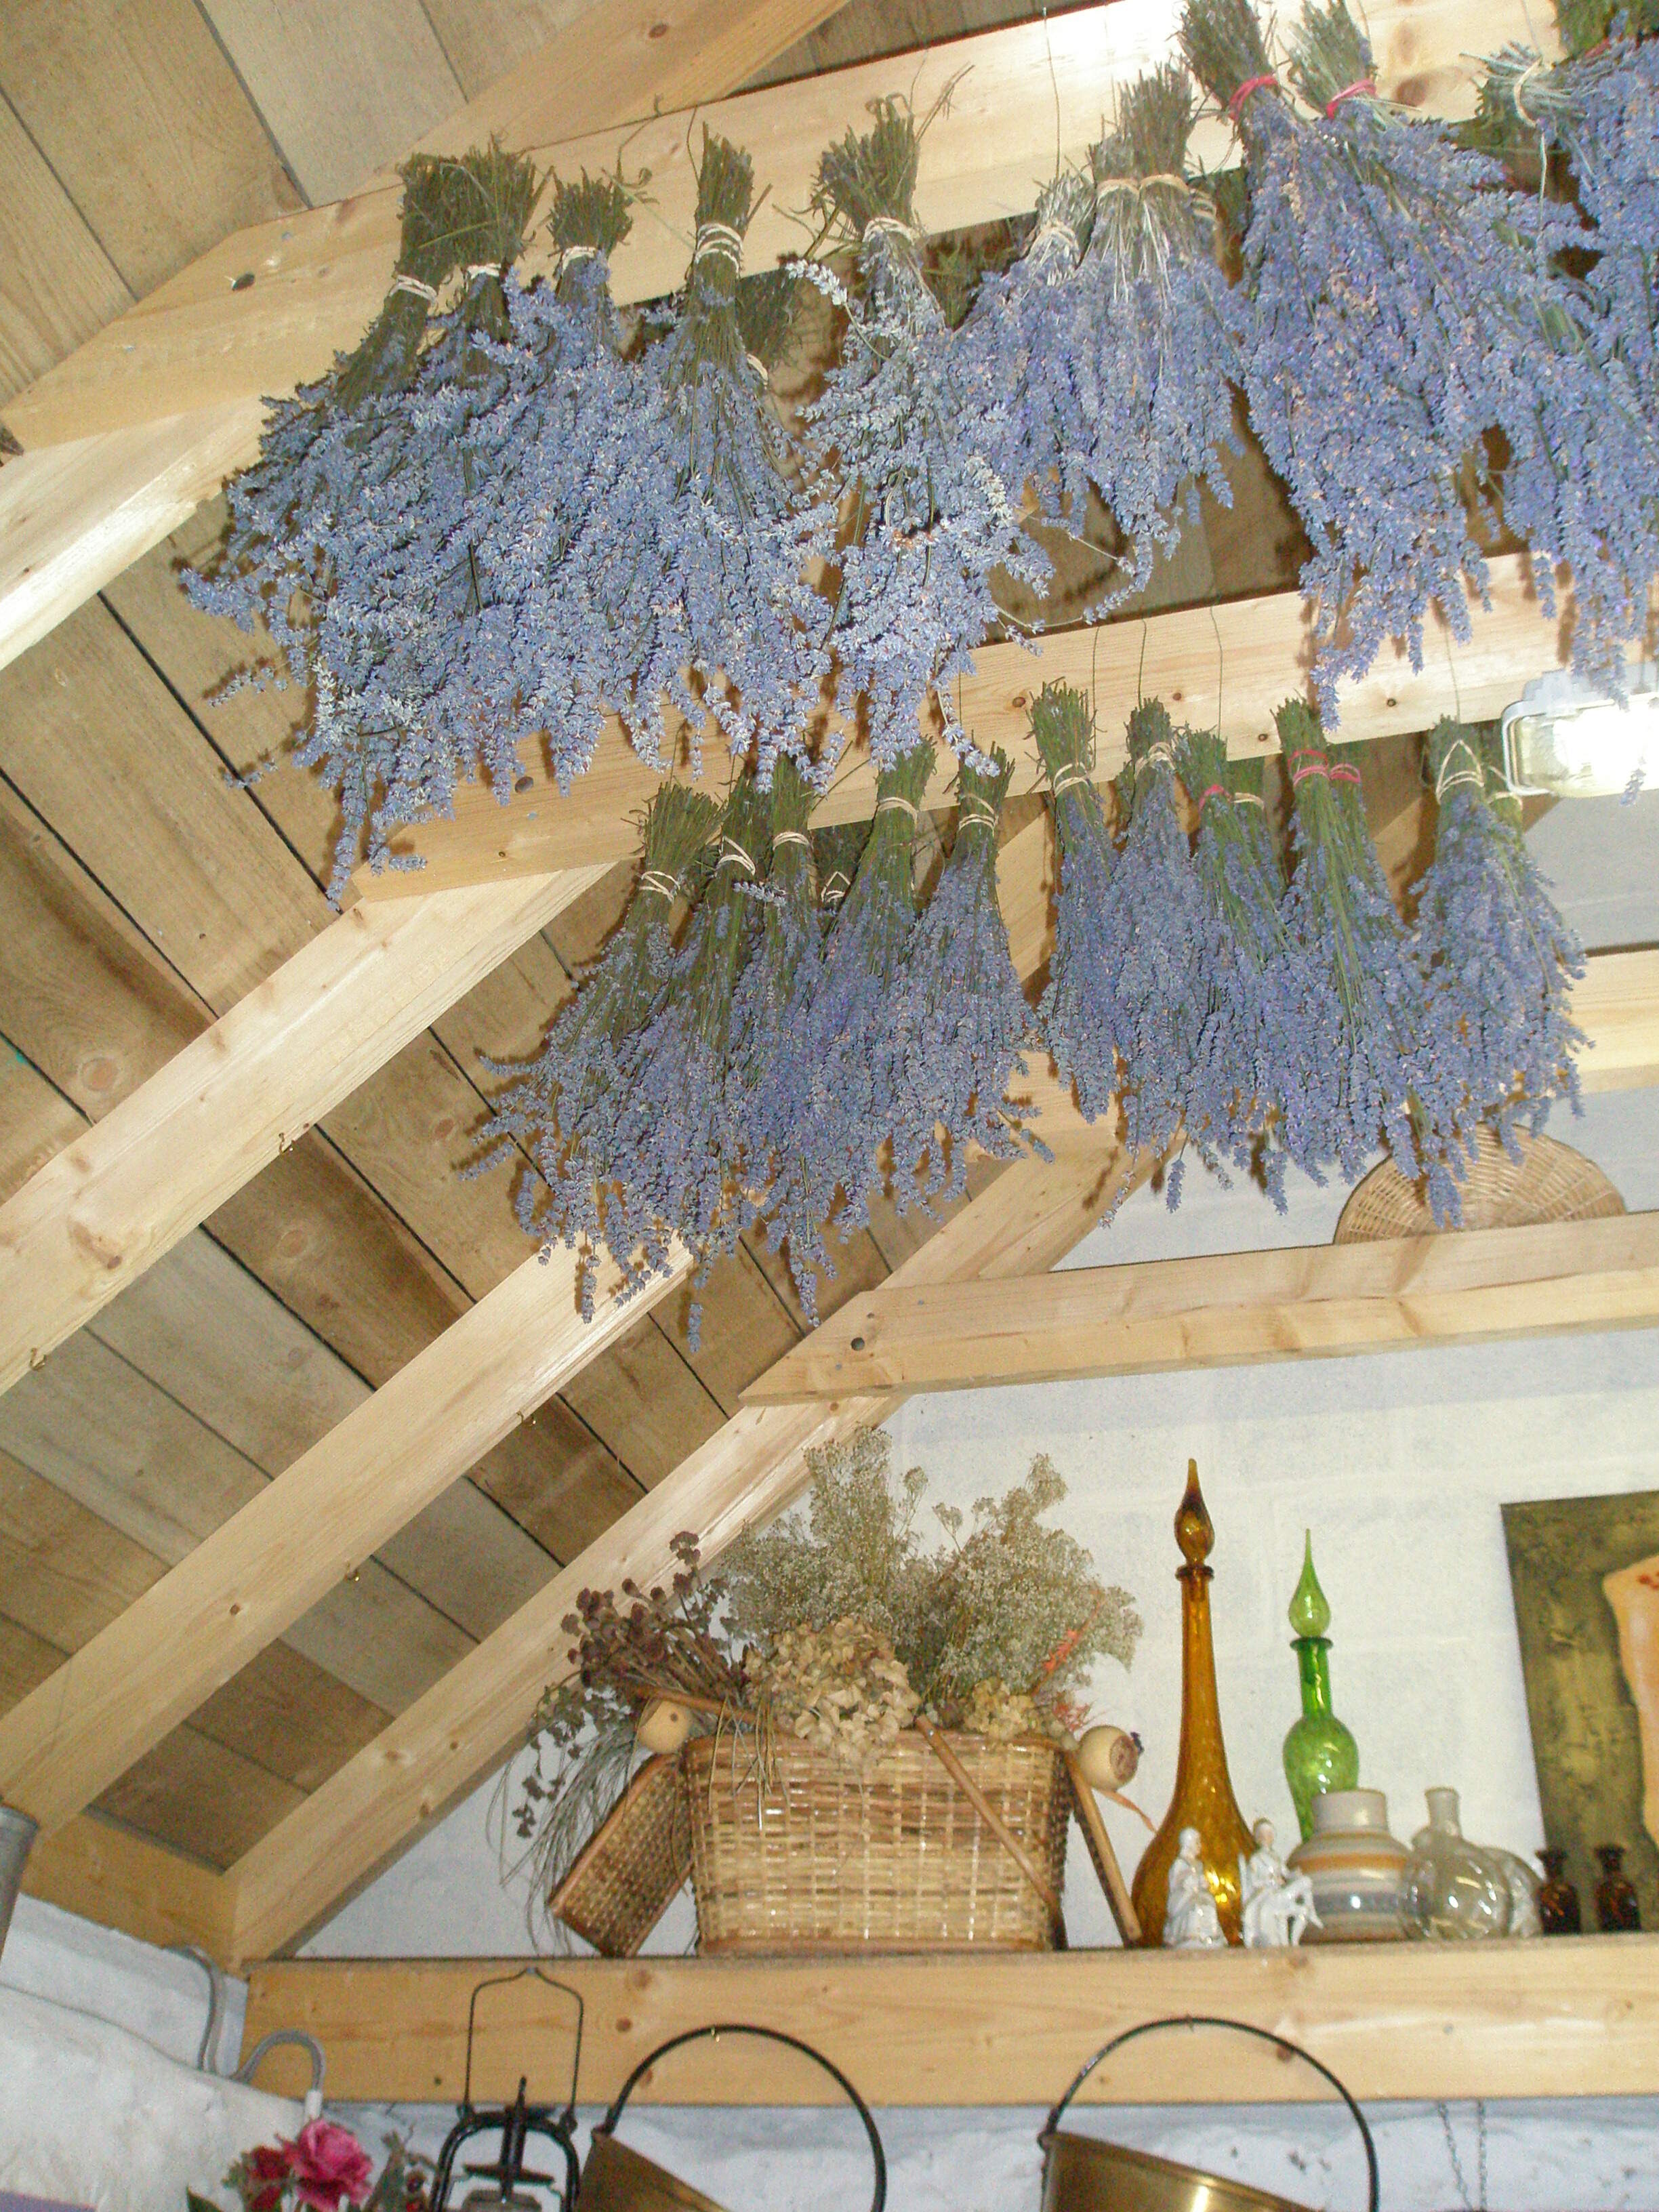 Drying room at Lavender Farm, Scotland 2006